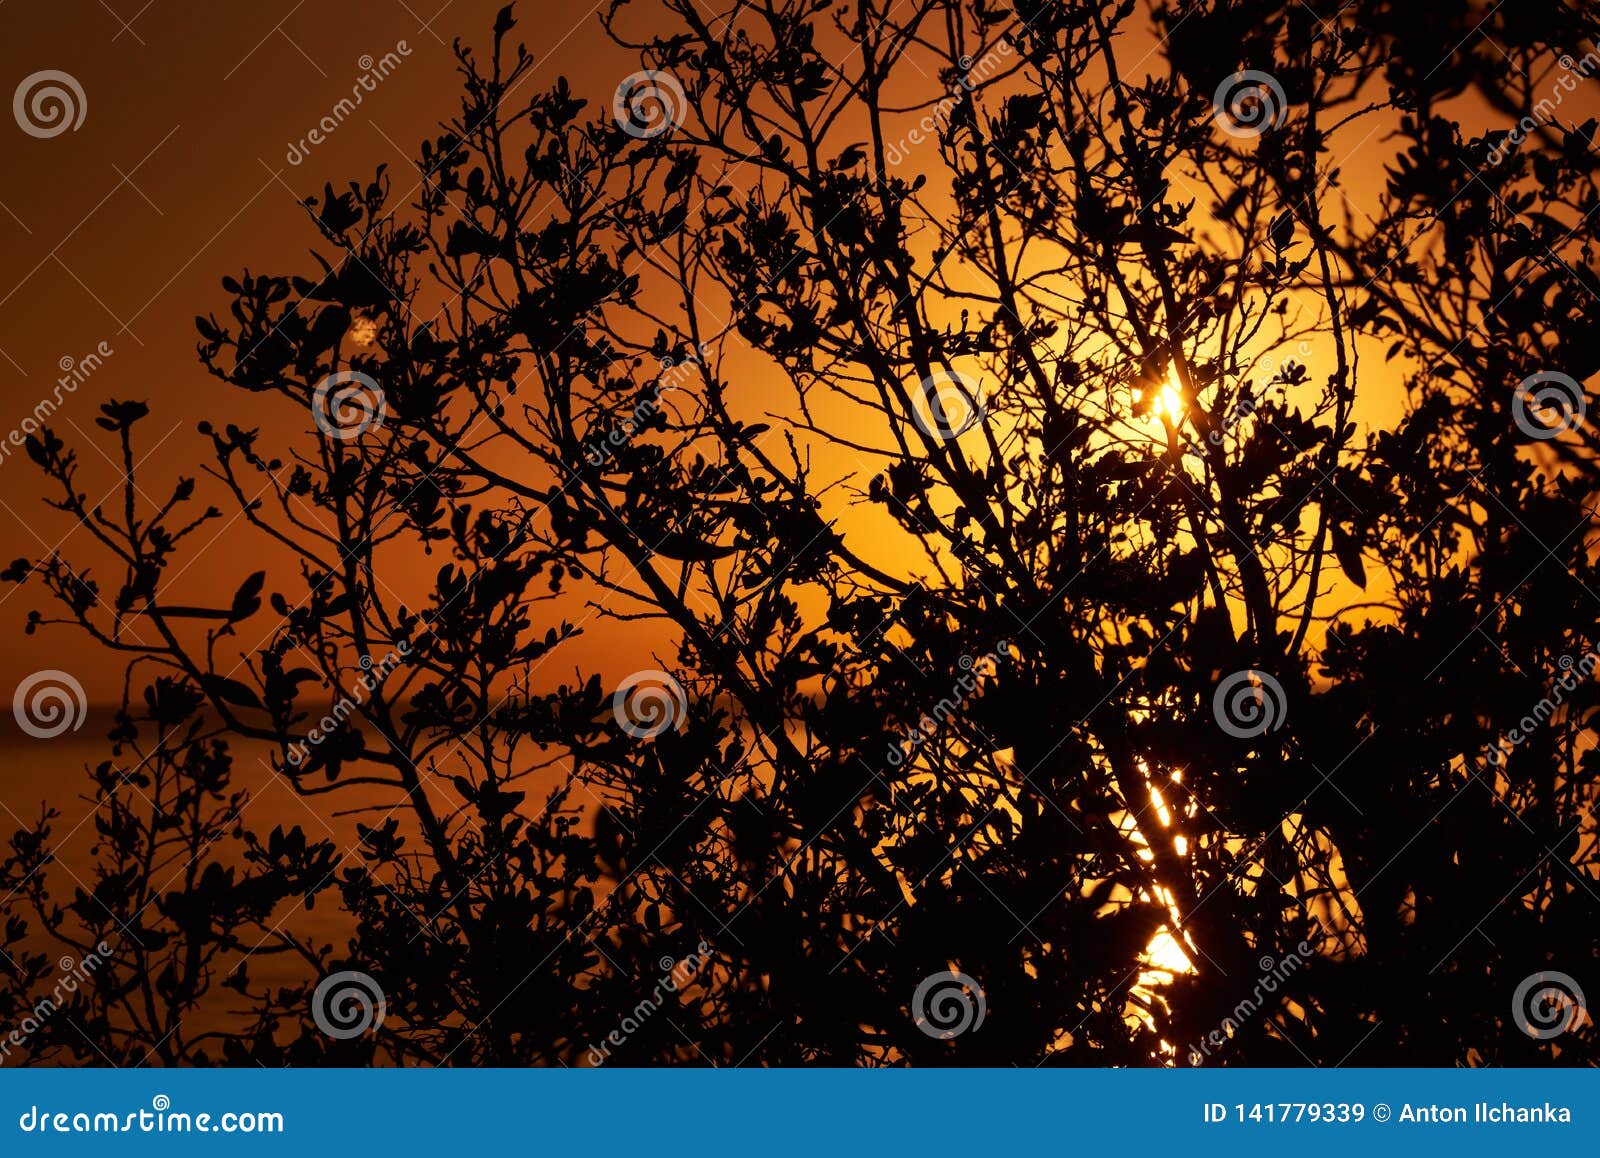 Dawn Sunset Sun through Tree Branches Black Contour of Branche Stock